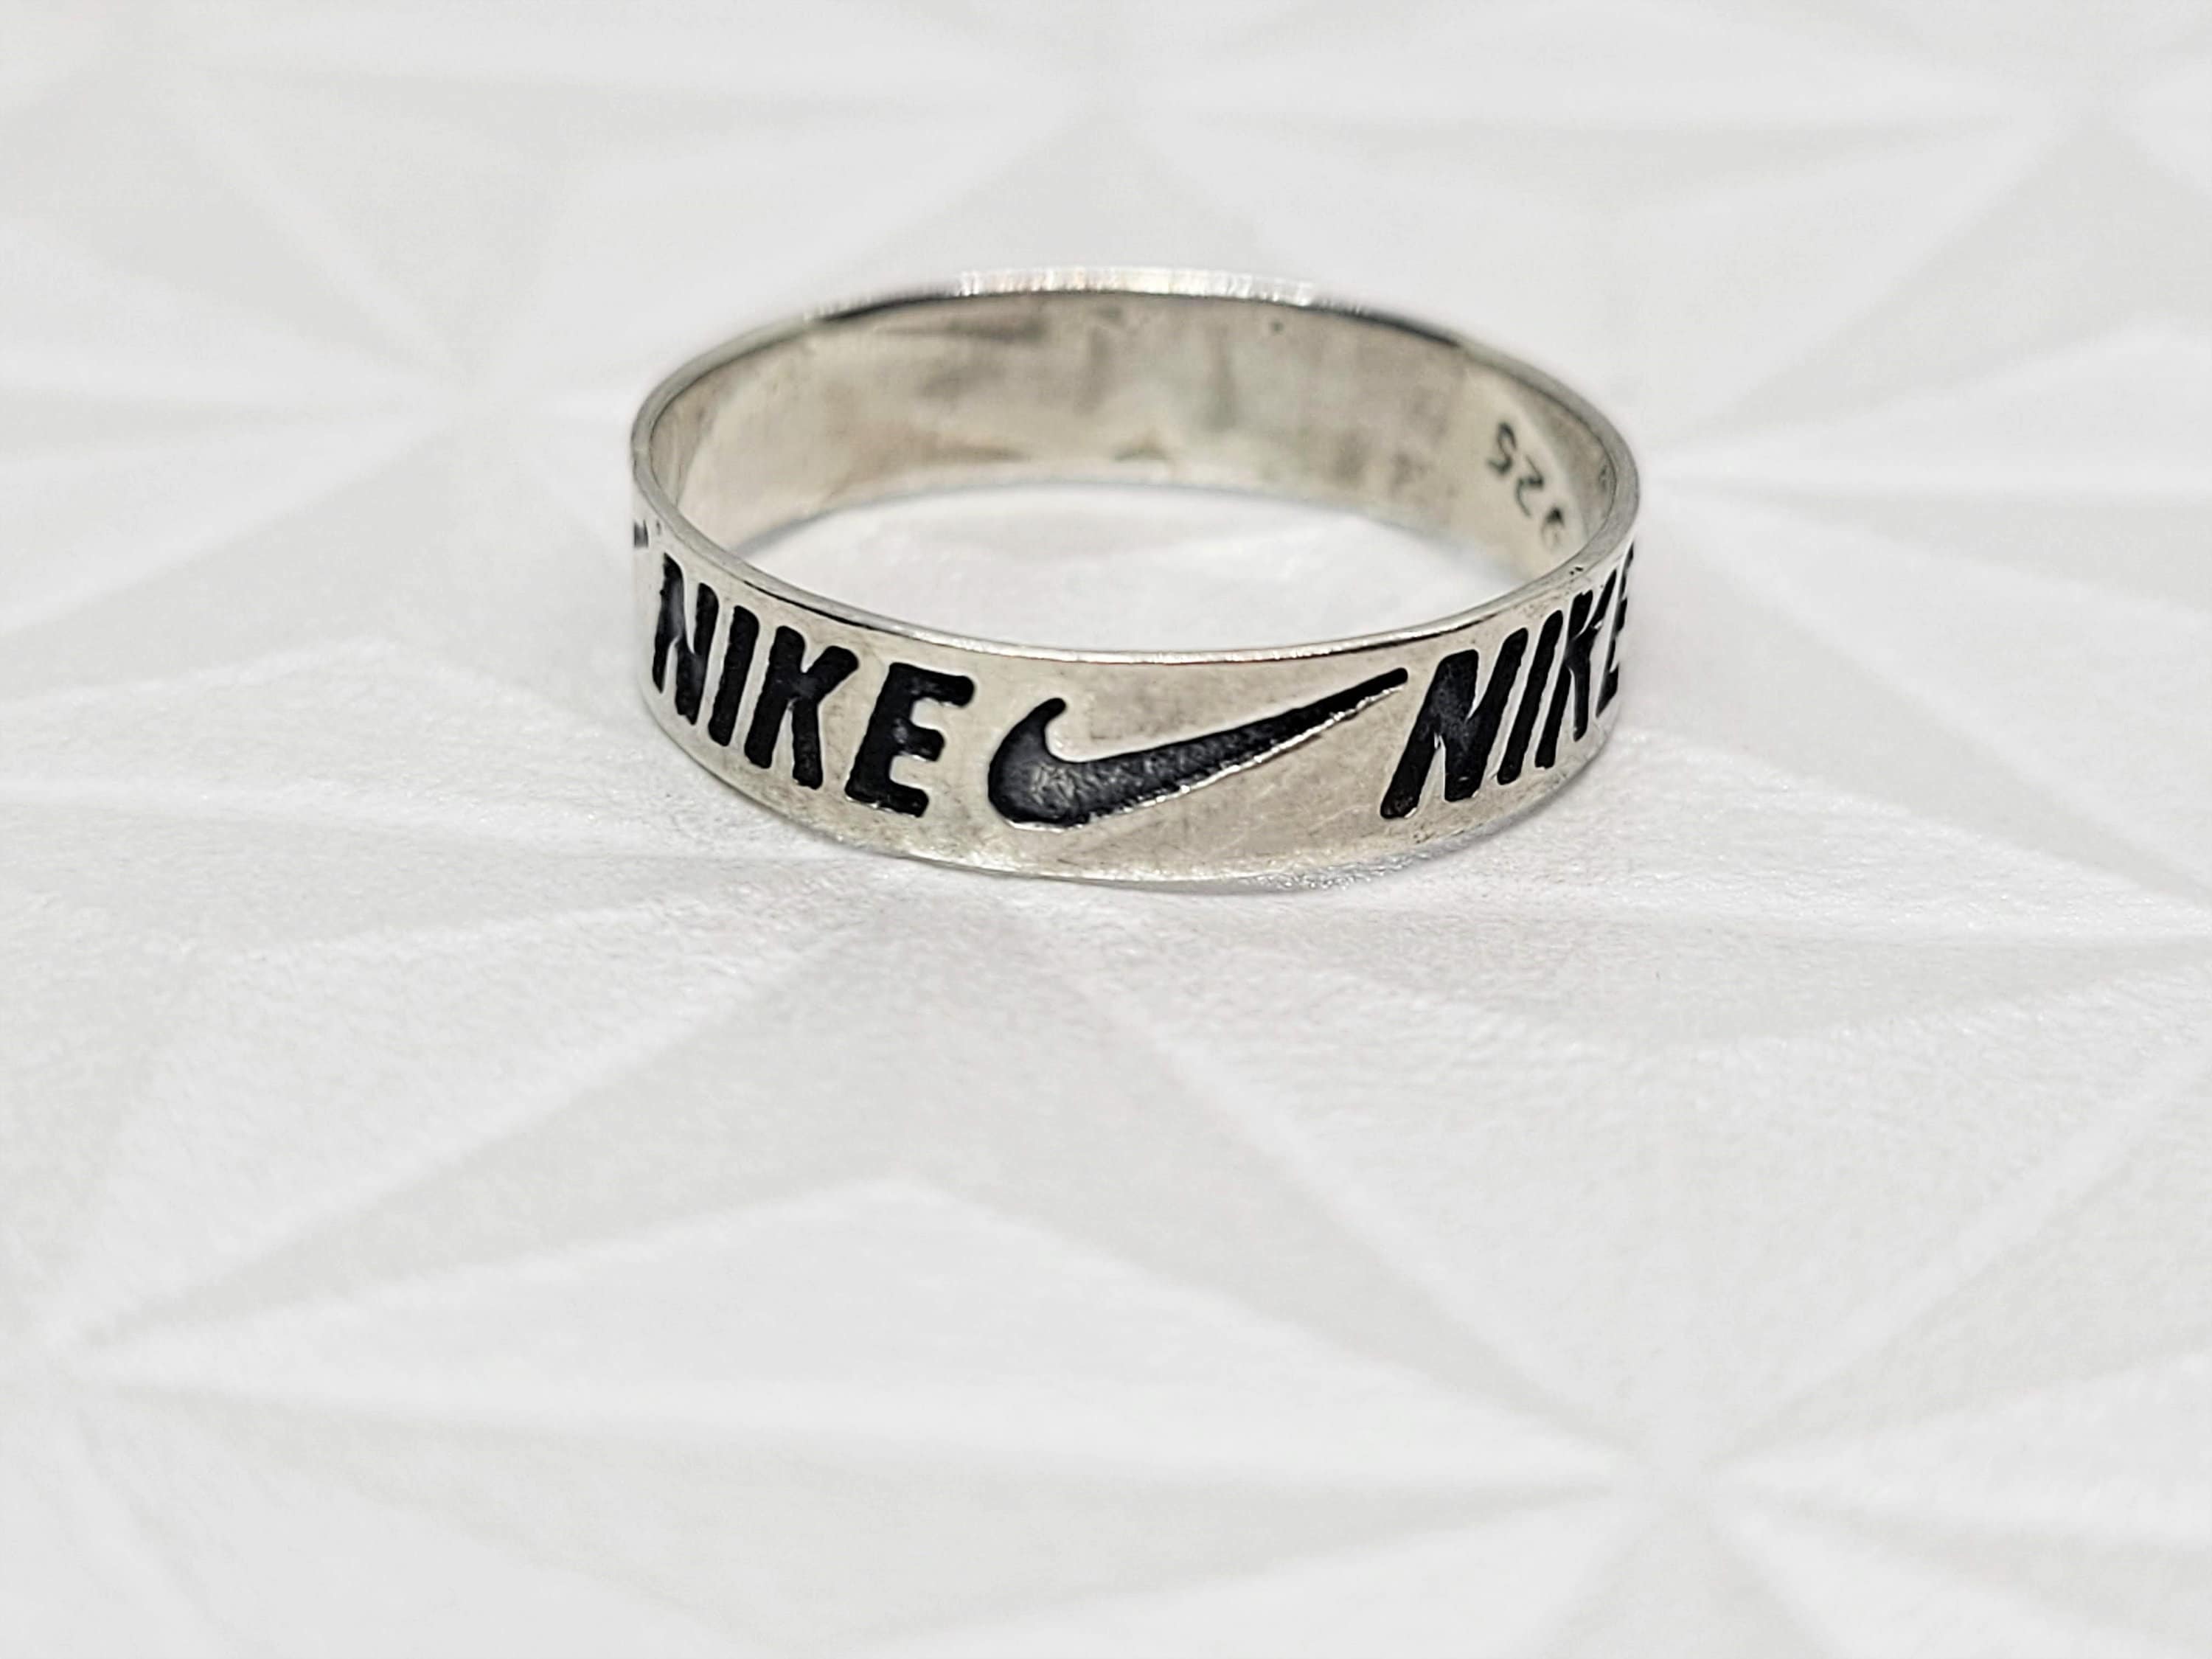 Nike ring - France